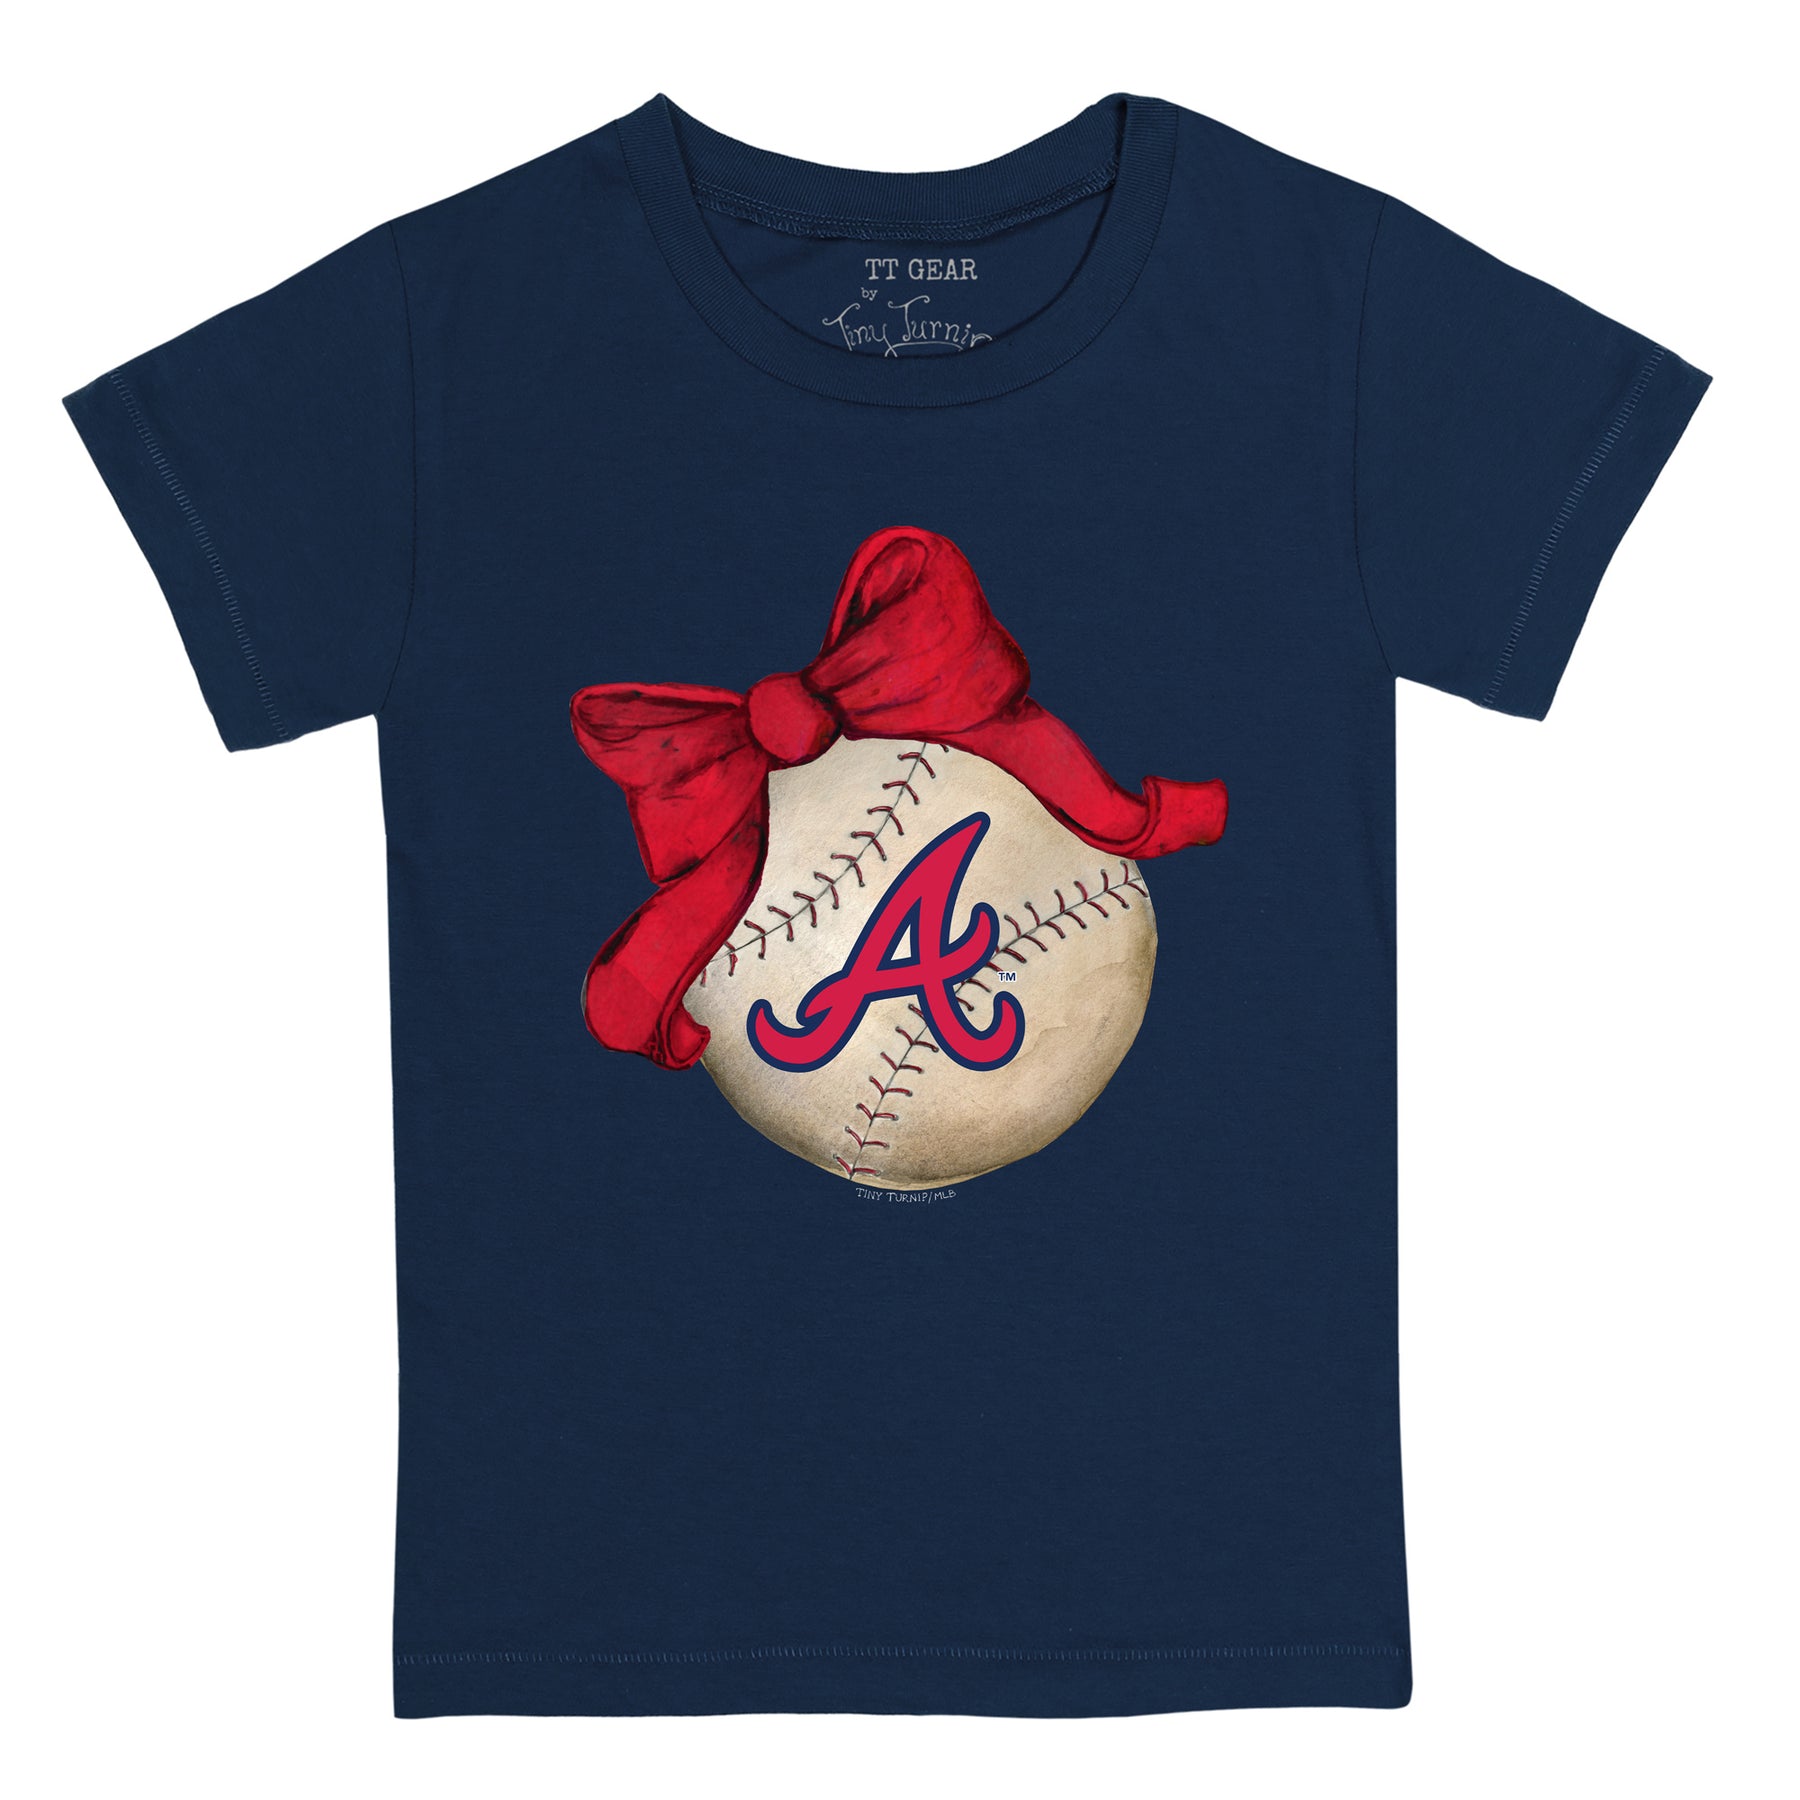 Atlanta Braves Red MLB Jerseys for sale